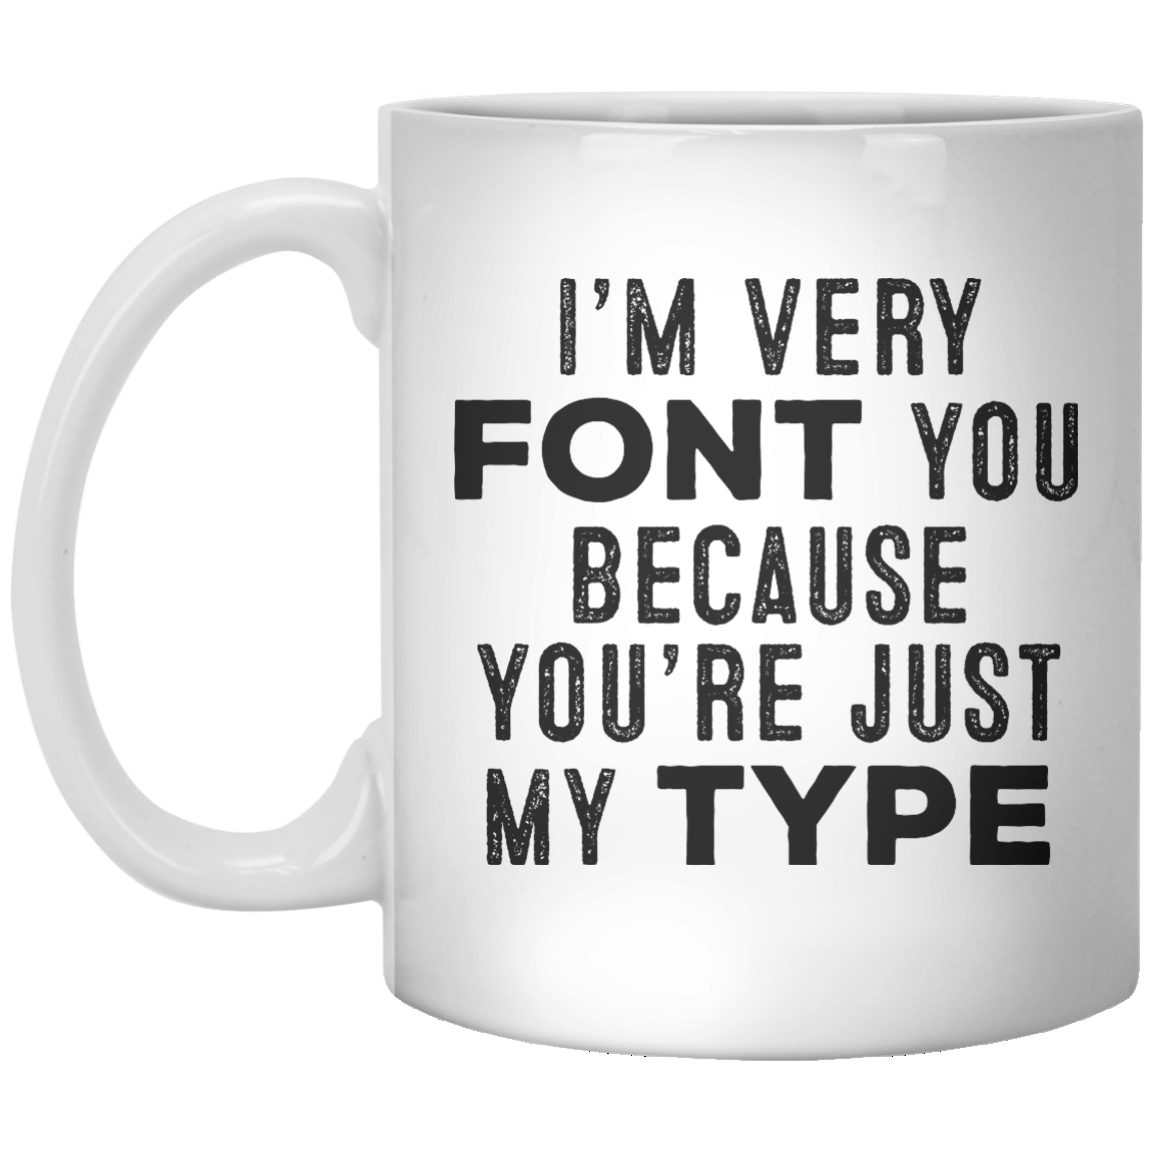 I’m Very Font You Because You’re Just My Type MUG - Shirtoopia